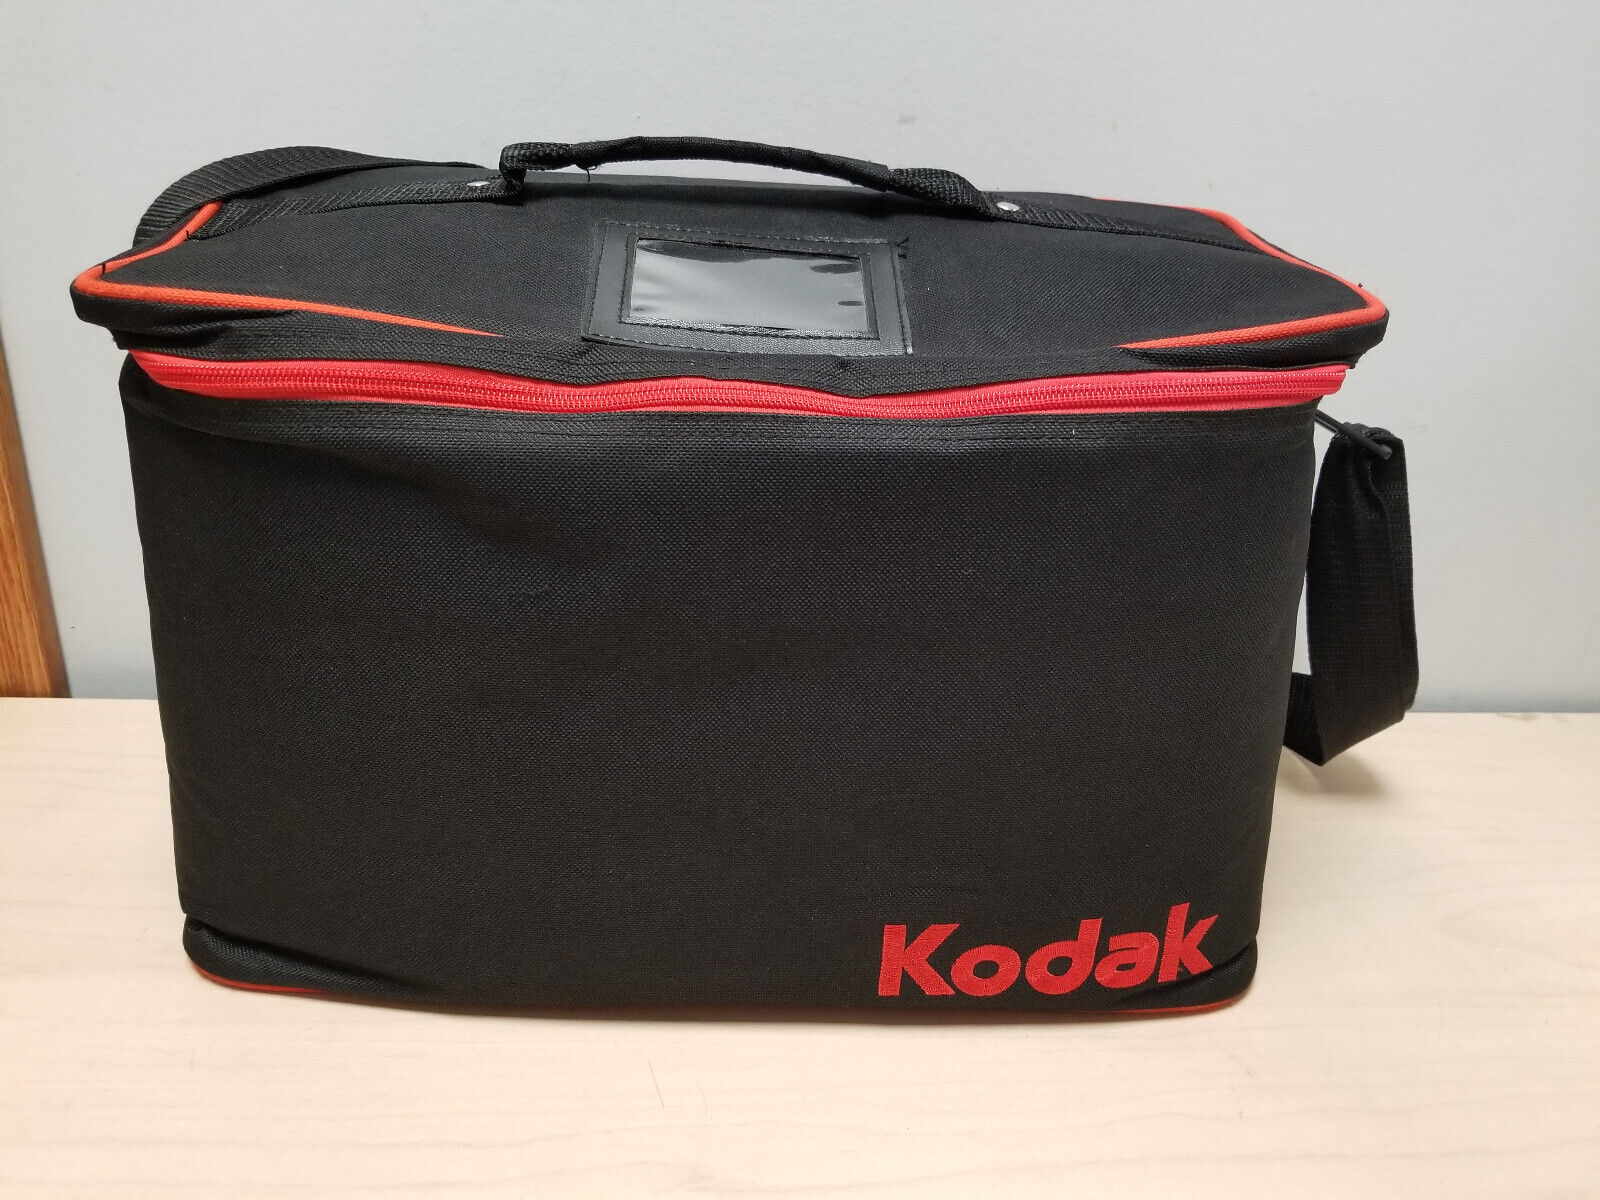 Kodak i2800 Sheetfed Scanner W/ ORIGINAL CARRYING CASE & AC-ADAPTER #J1607